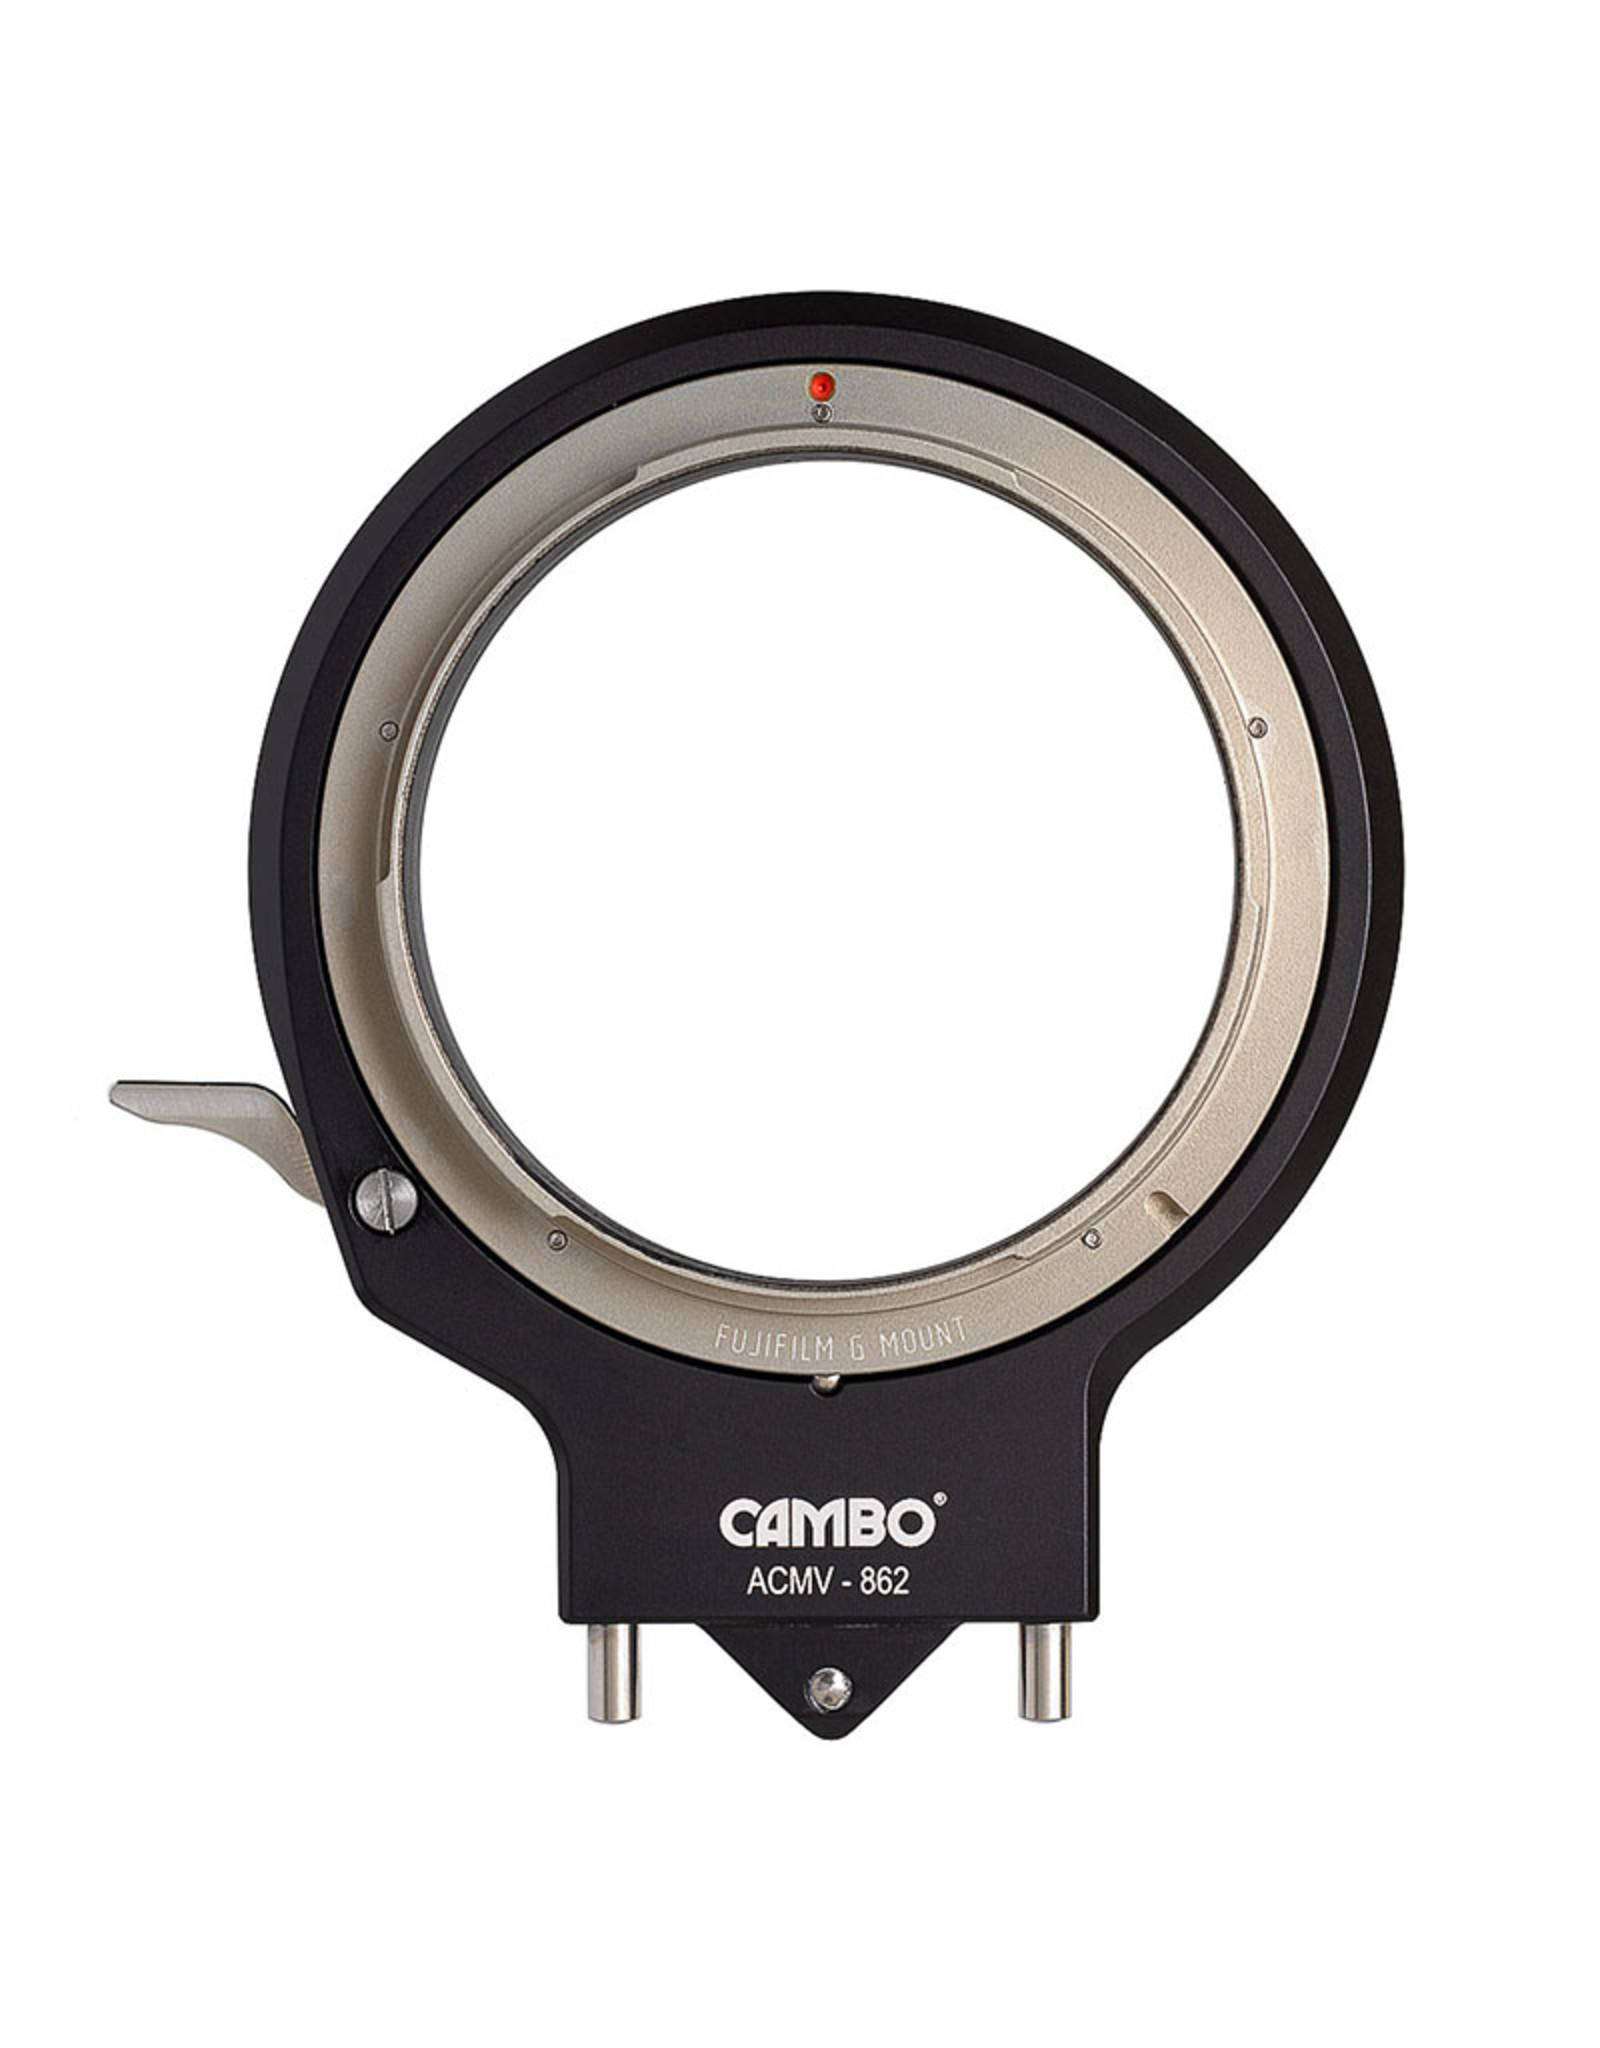 Cambo Cambo ACMV-F50 Kit Actus MV camera body with Fuji GFX mount and long bellows